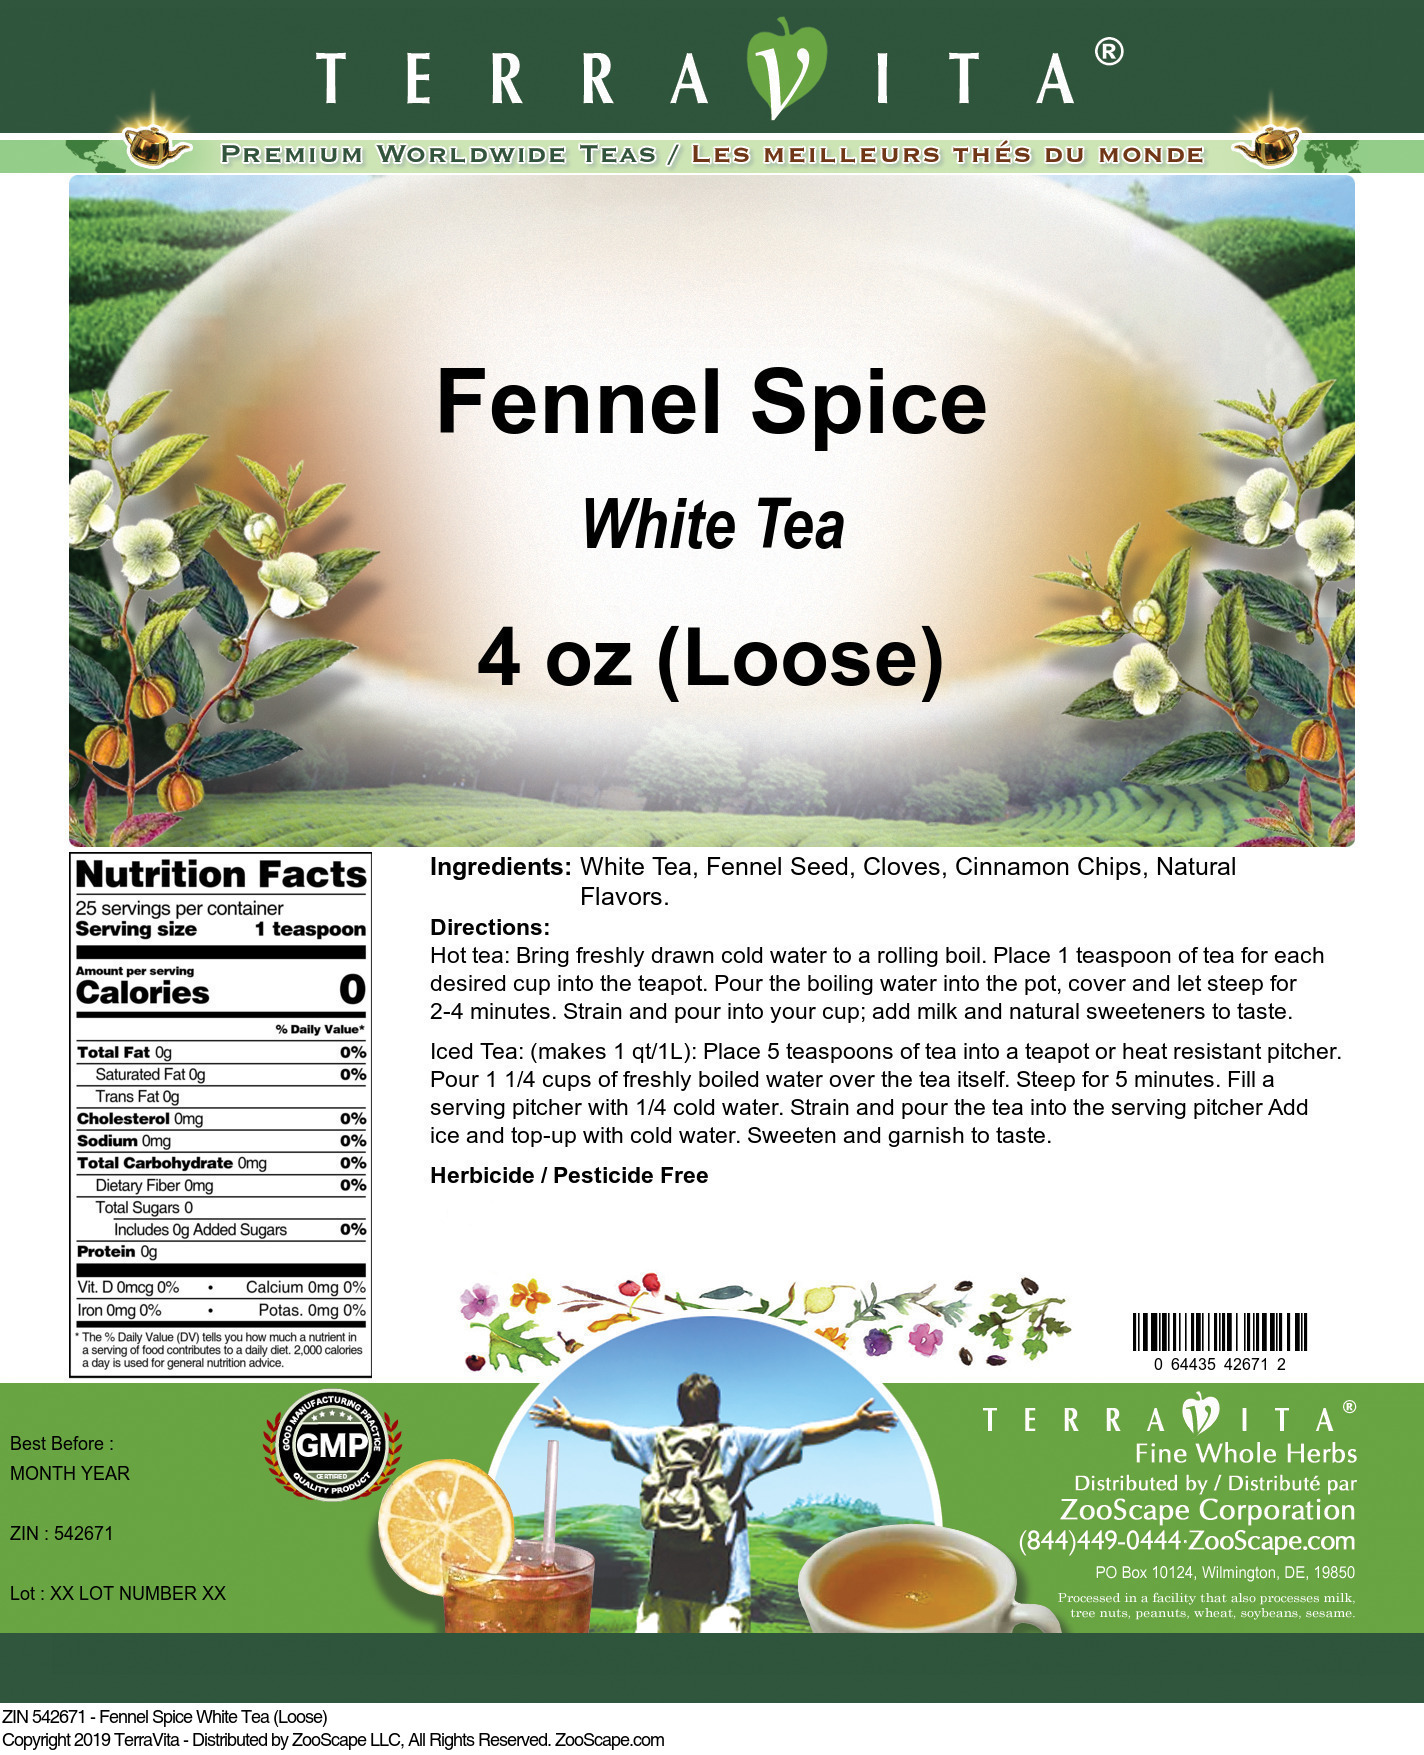 Fennel Spice White Tea (Loose) - Label